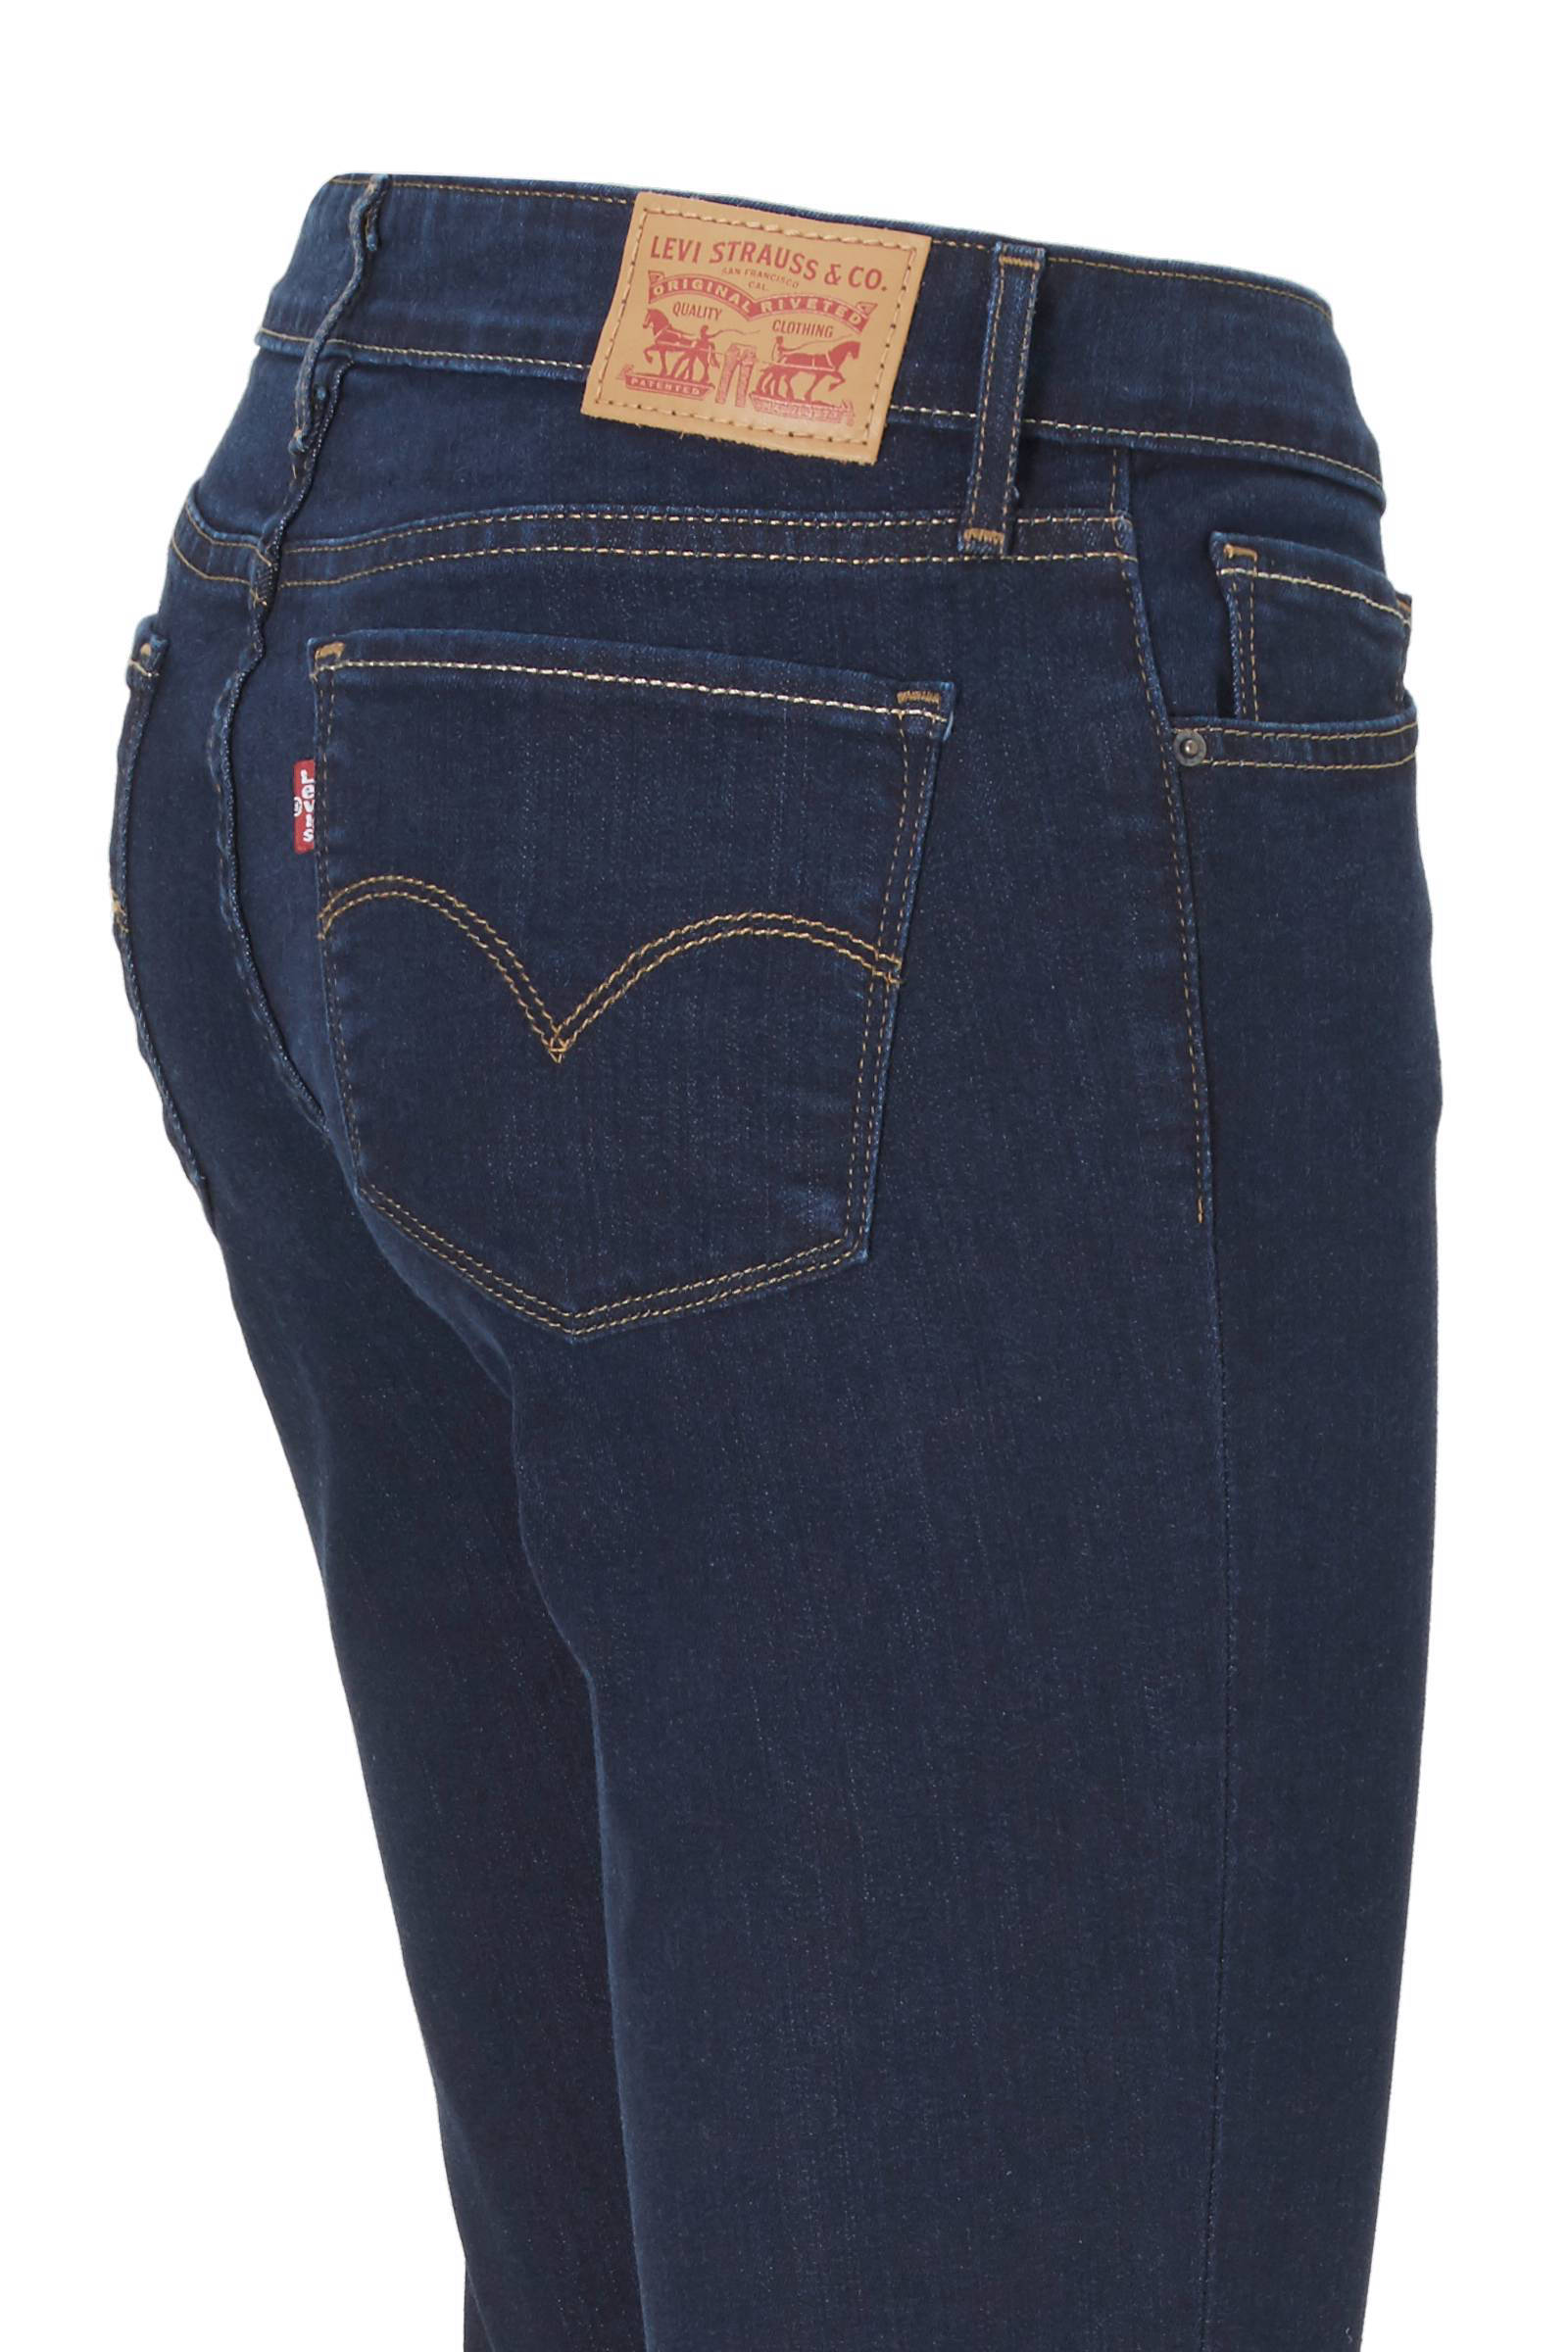 Levi's Women's 714 Straight Jeans Sale, SAVE 52% 